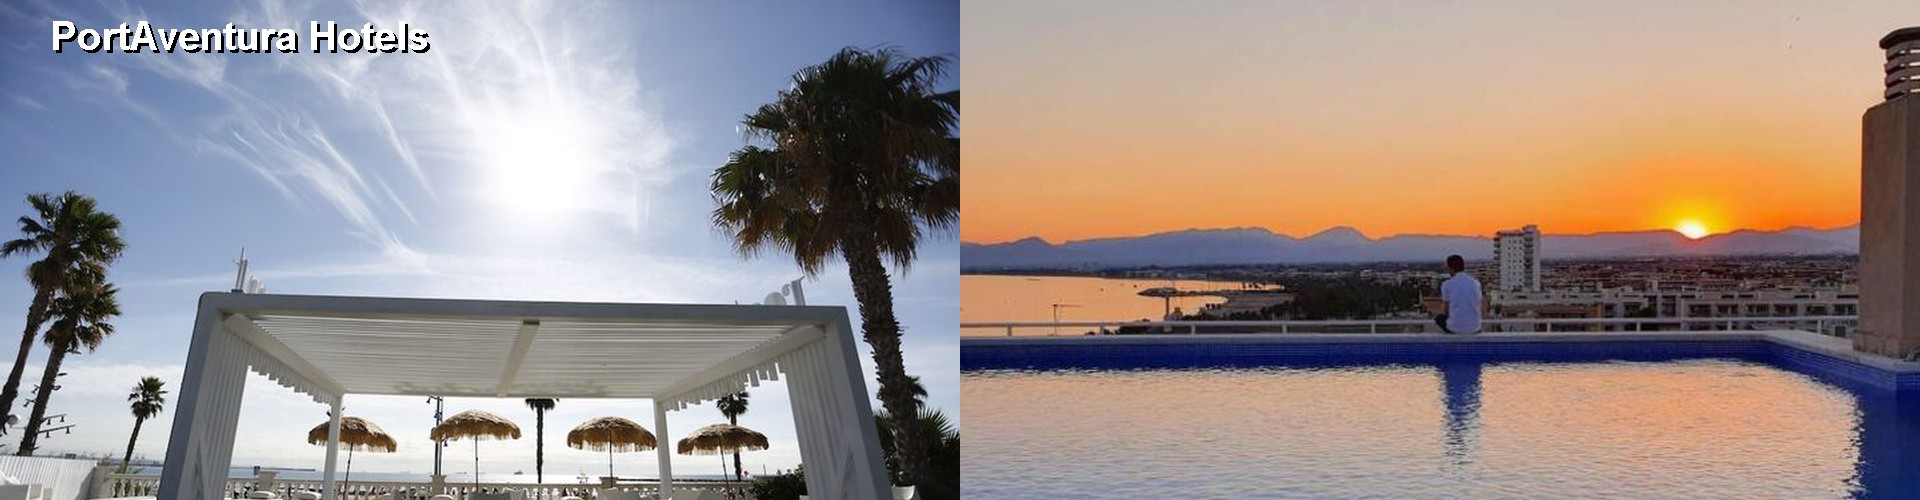 5 Best Hotels near PortAventura